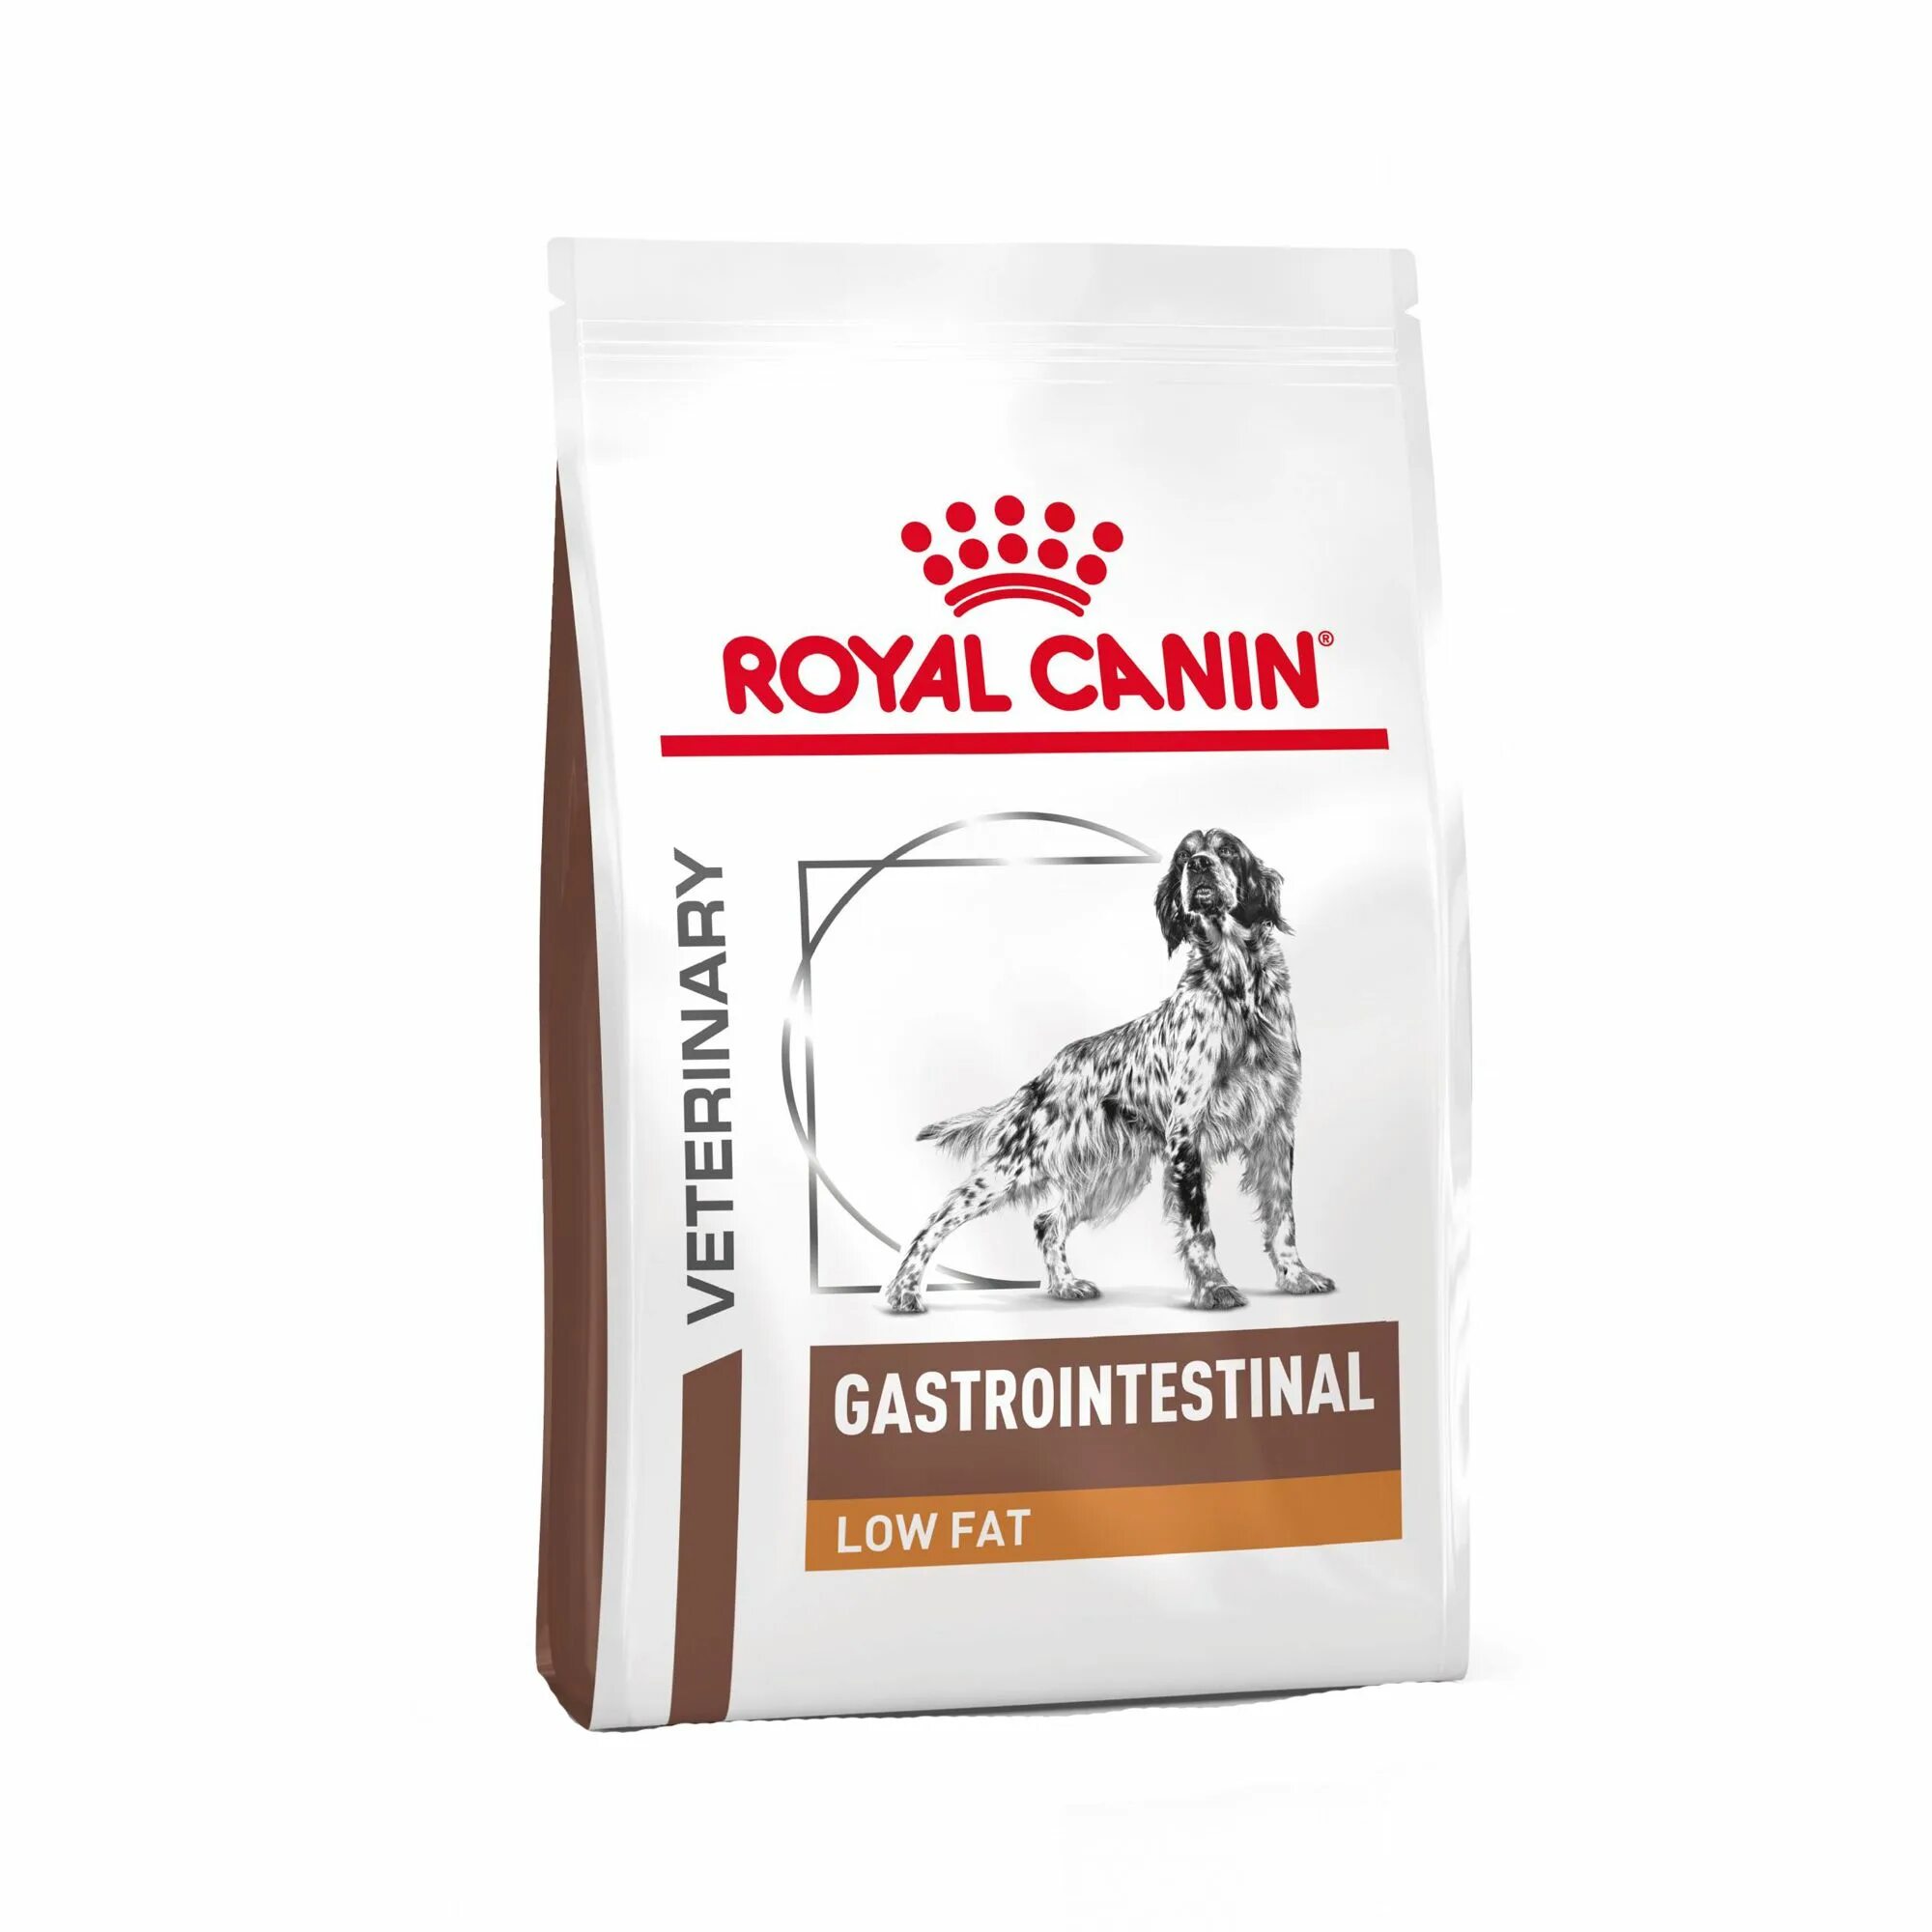 Royal canin gastrointestinal fiber для кошек. Роял Канин Файбер Респонс. Royal Canin Anallergenic для собак. Роял Канин Hypoallergenic для собак. Роял Канин Neutered Adult для собак.